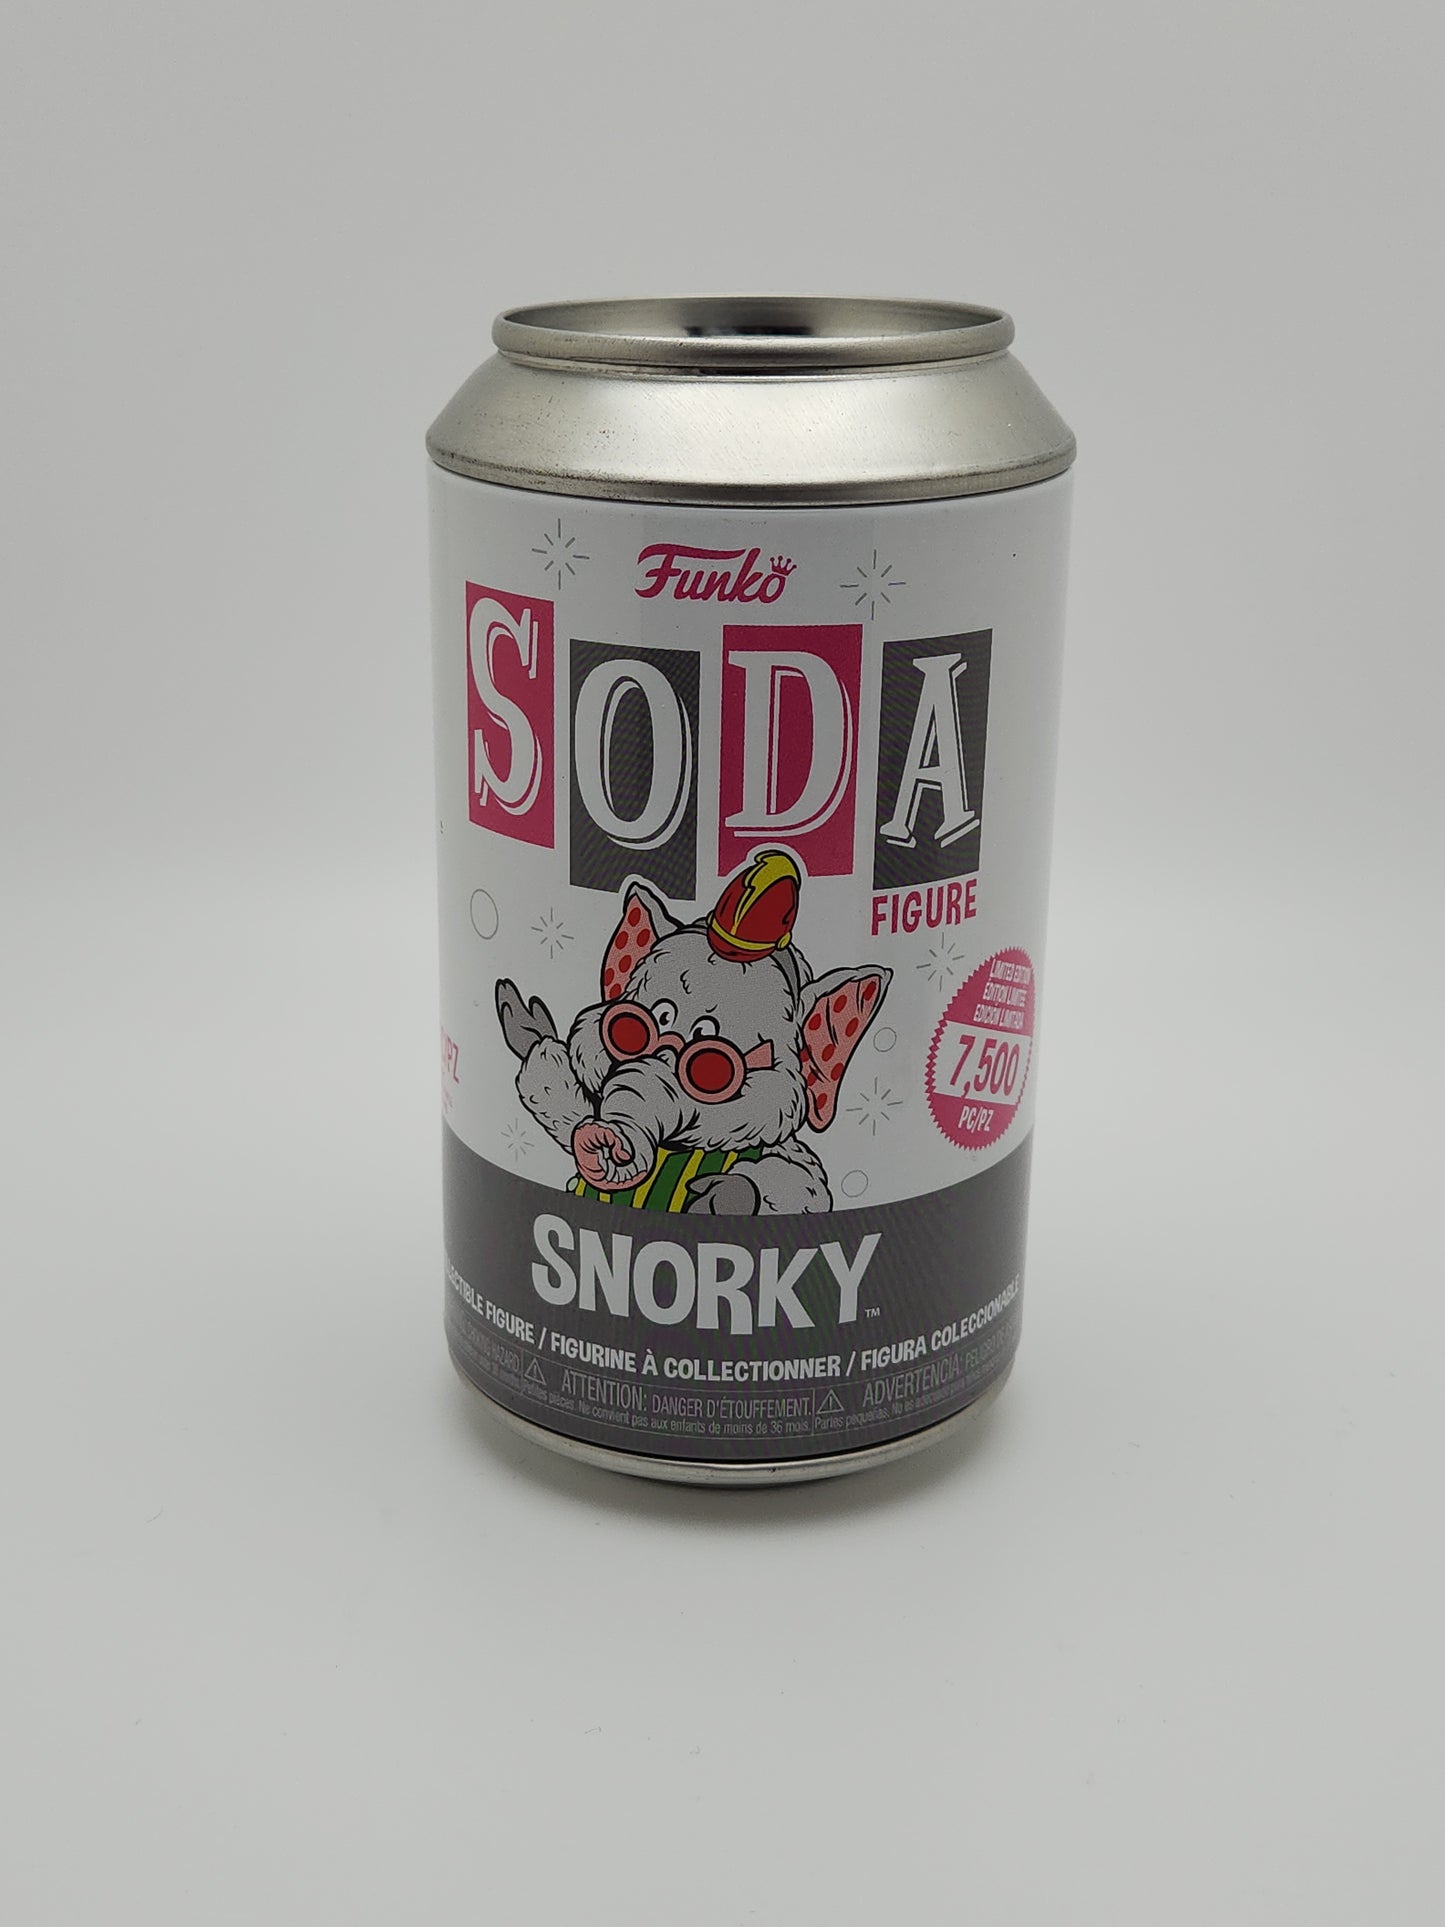 Funko Soda- Snorky